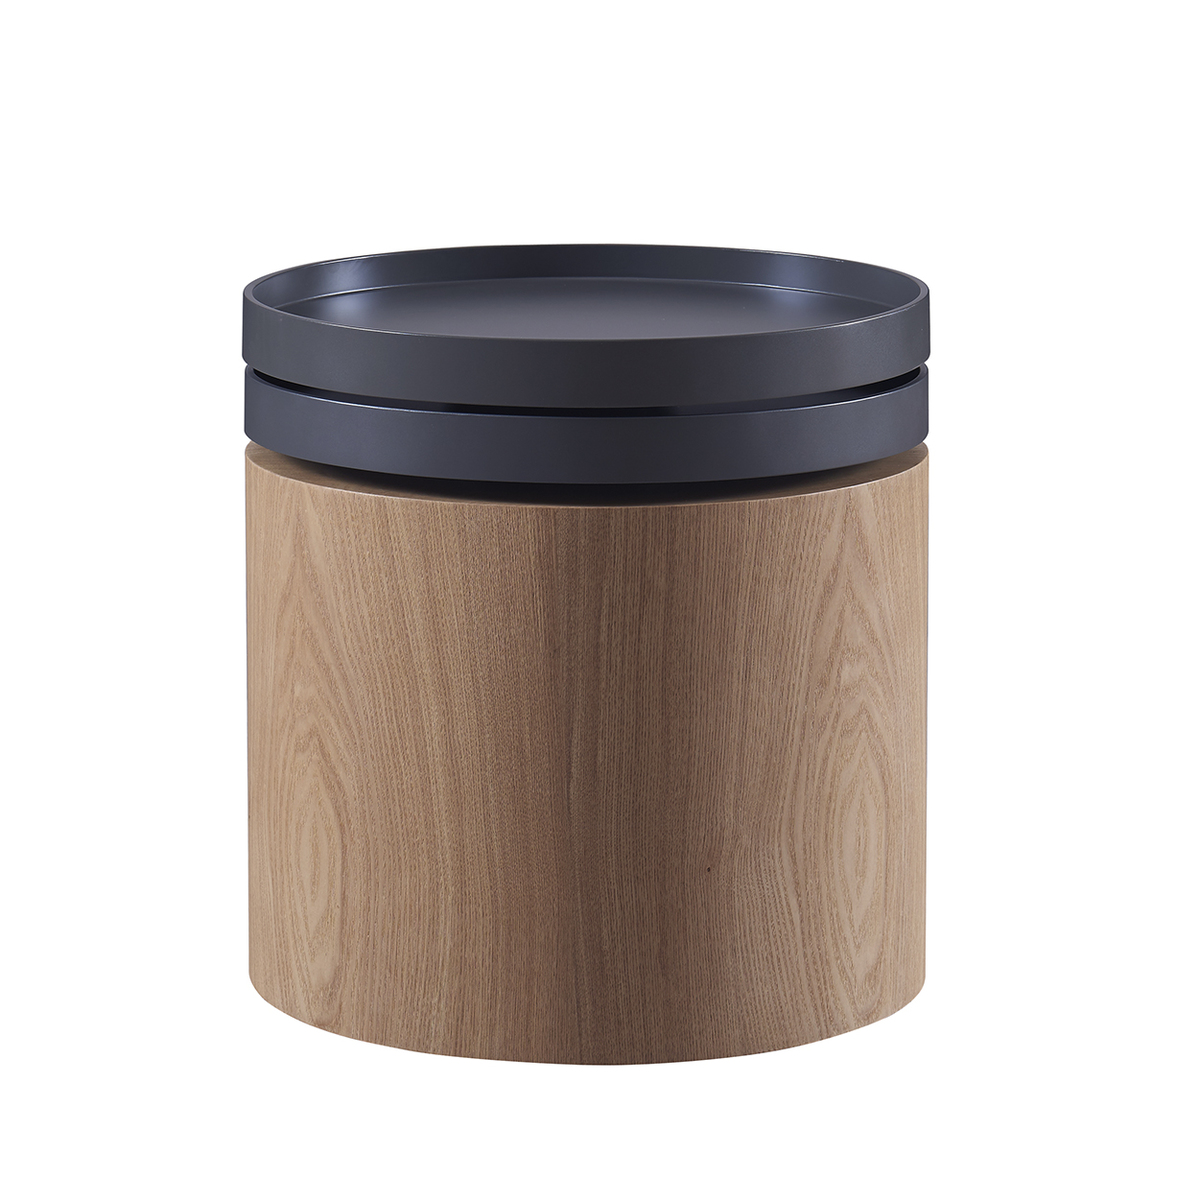 18.9“ ASH with Dark Grey COLOR Round Coffee table